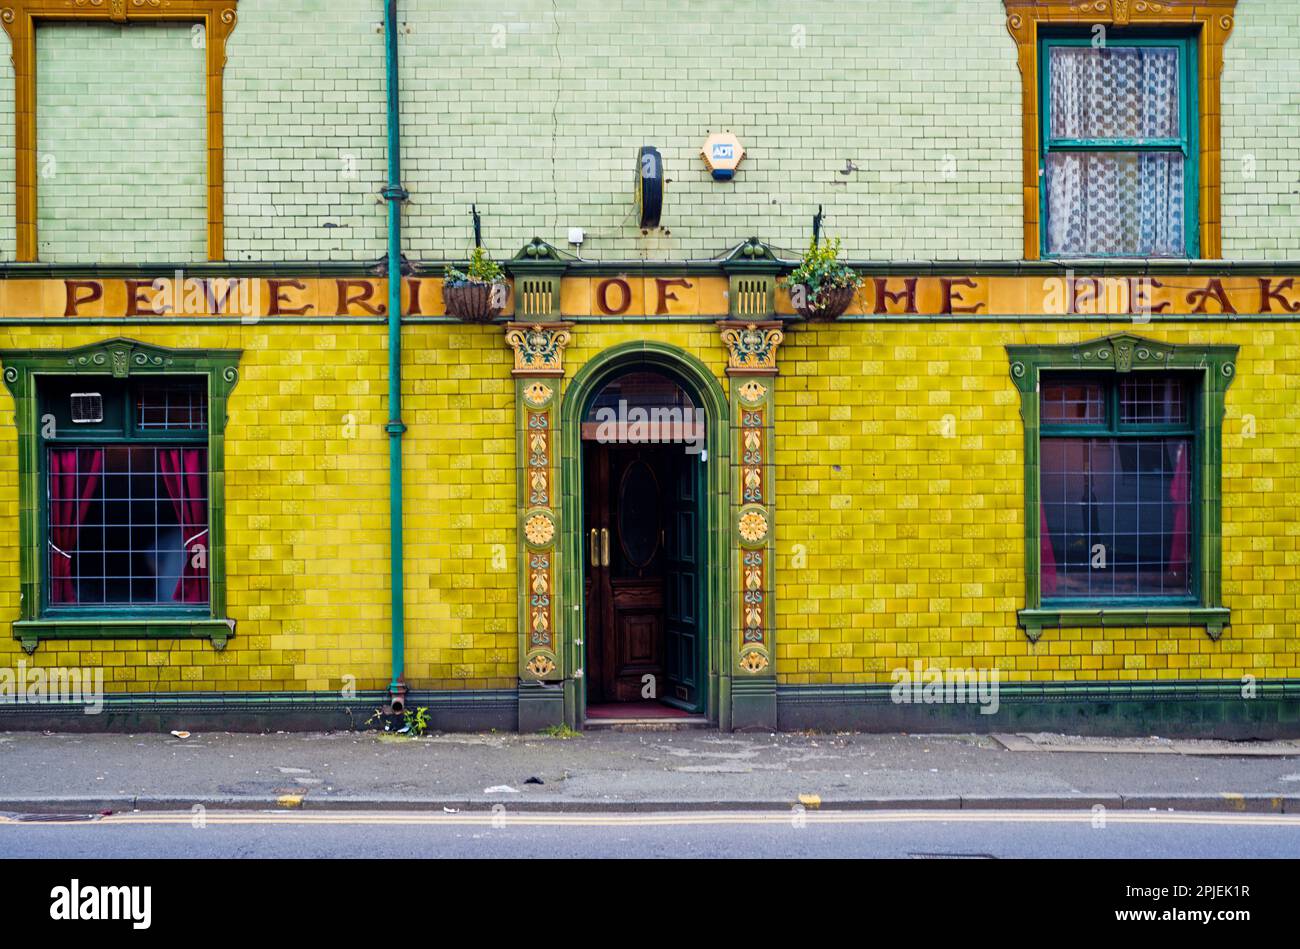 Peveril of the Peak pub, Great Bridgewater Street, Manchester, Lancashire, Angleterre Banque D'Images